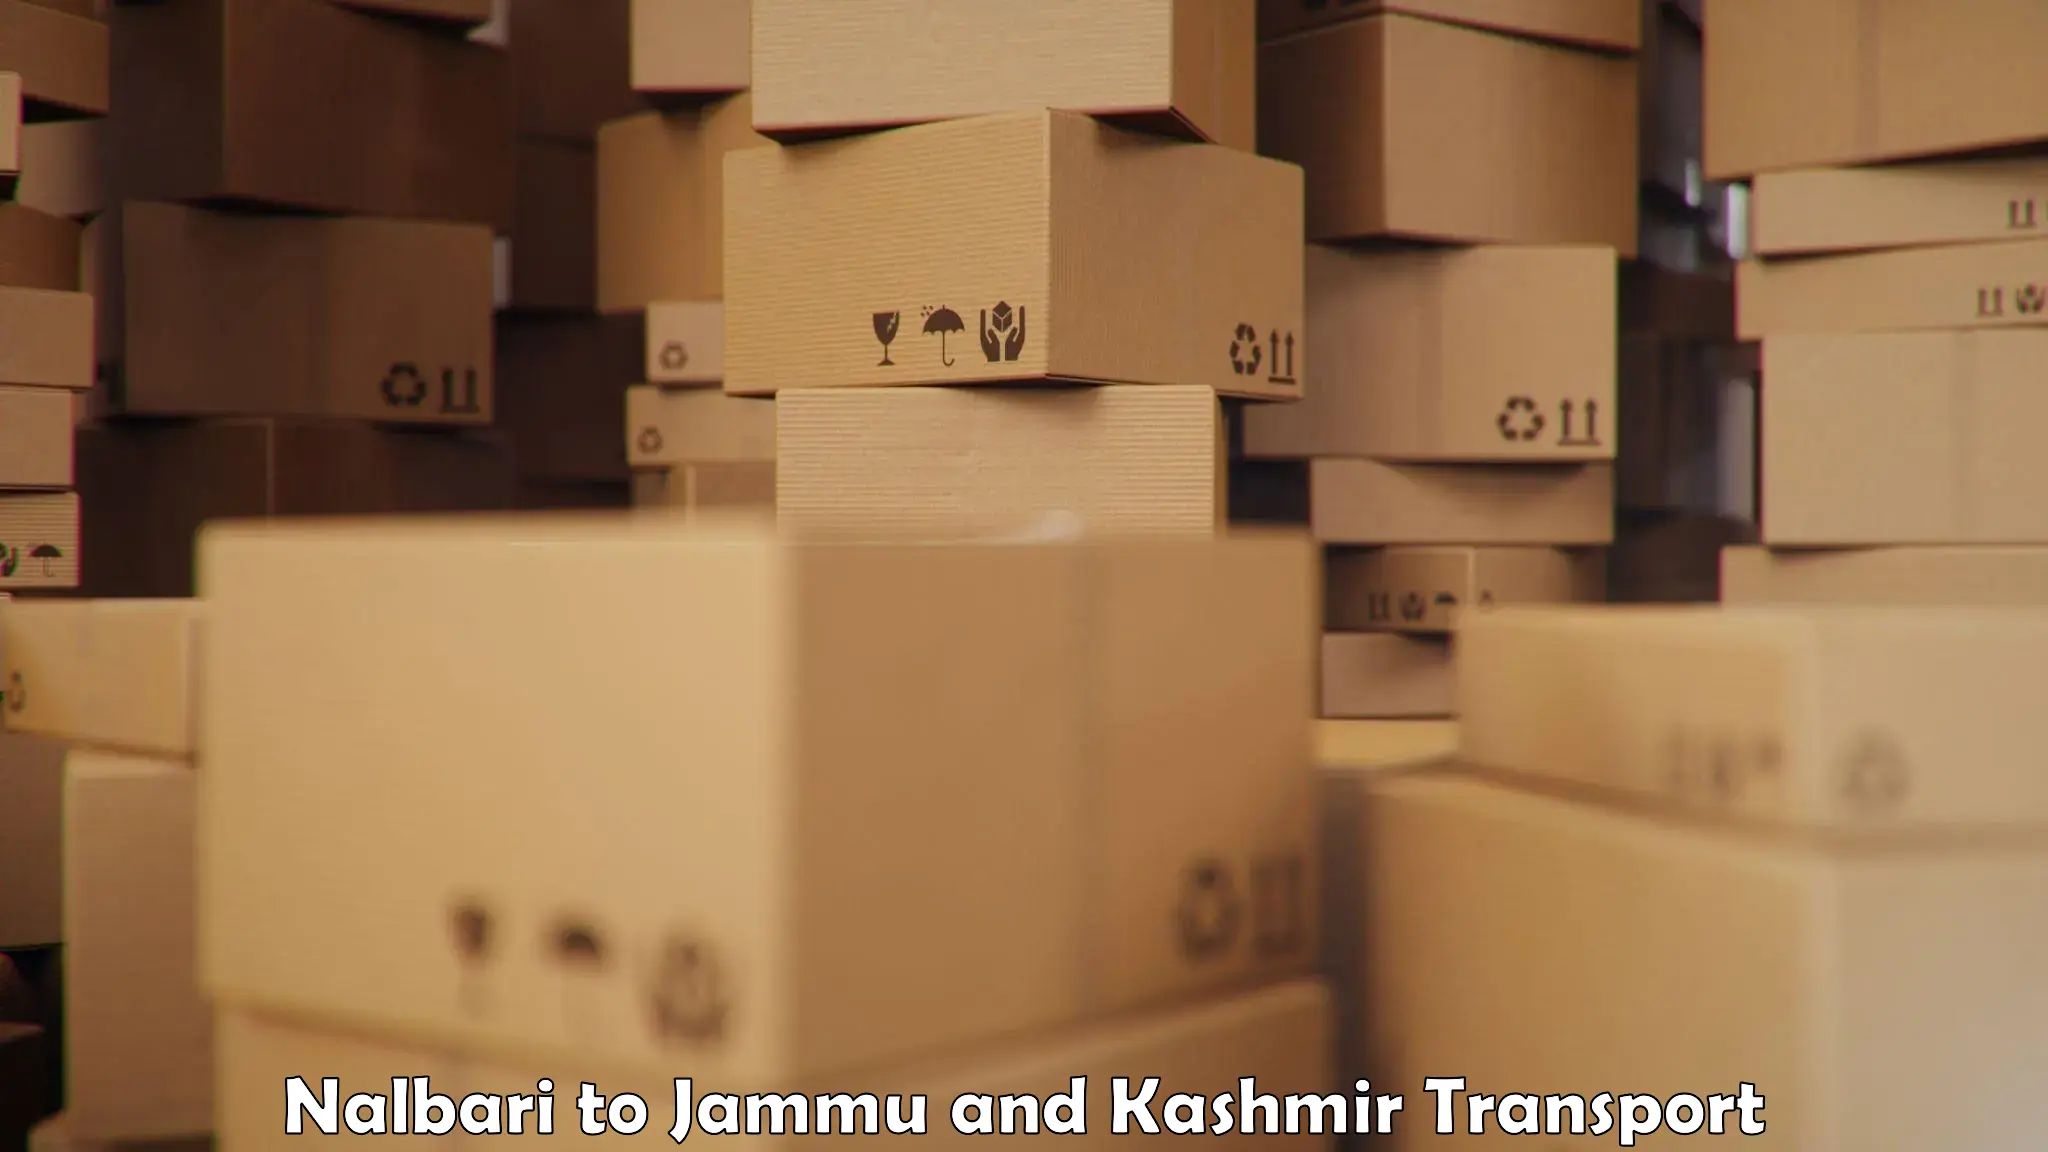 Goods delivery service Nalbari to Jammu and Kashmir